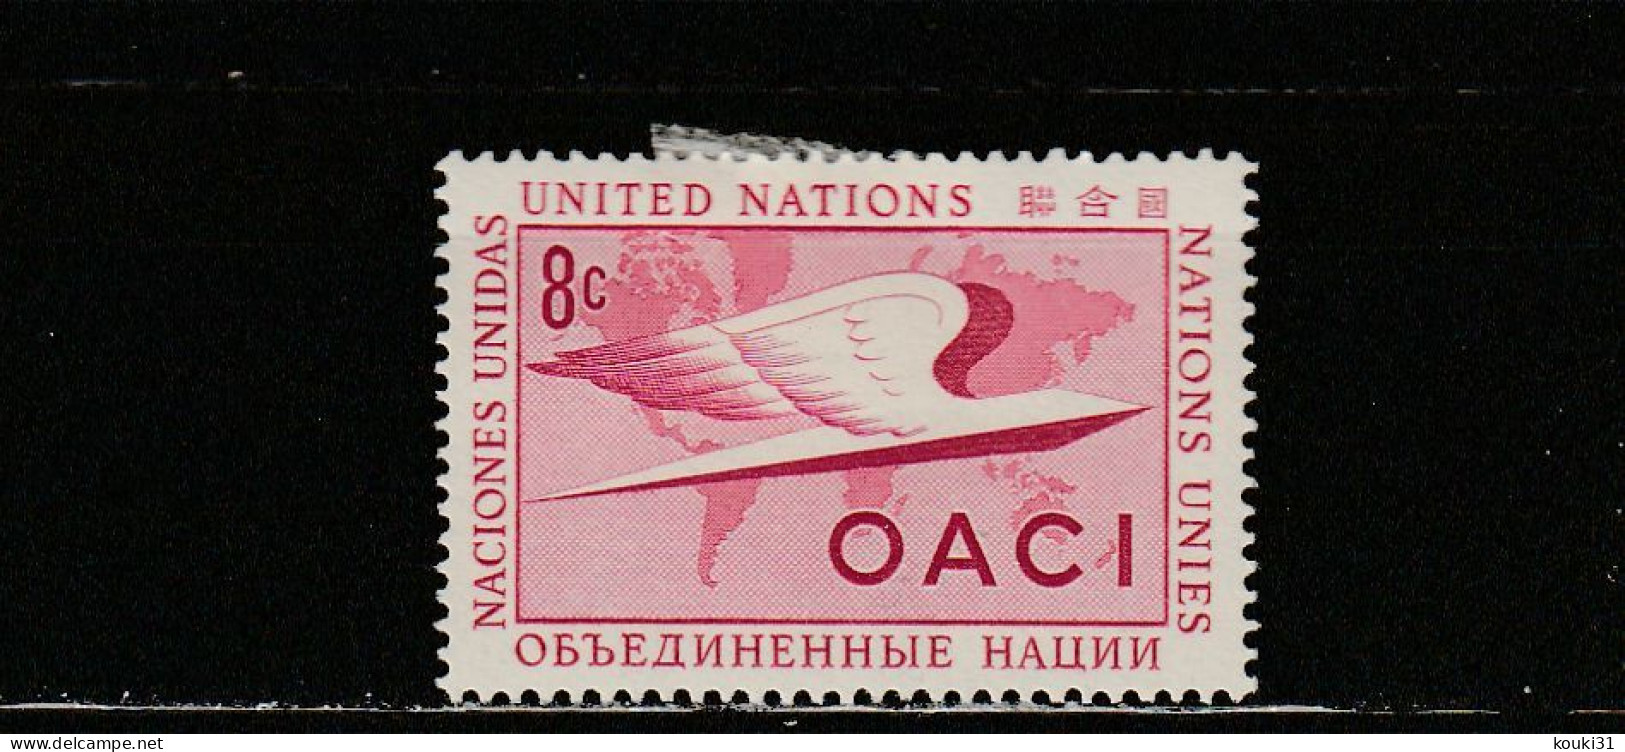 Nations Unies (New-York) YT 32 * : OACI - 1955 - Ongebruikt